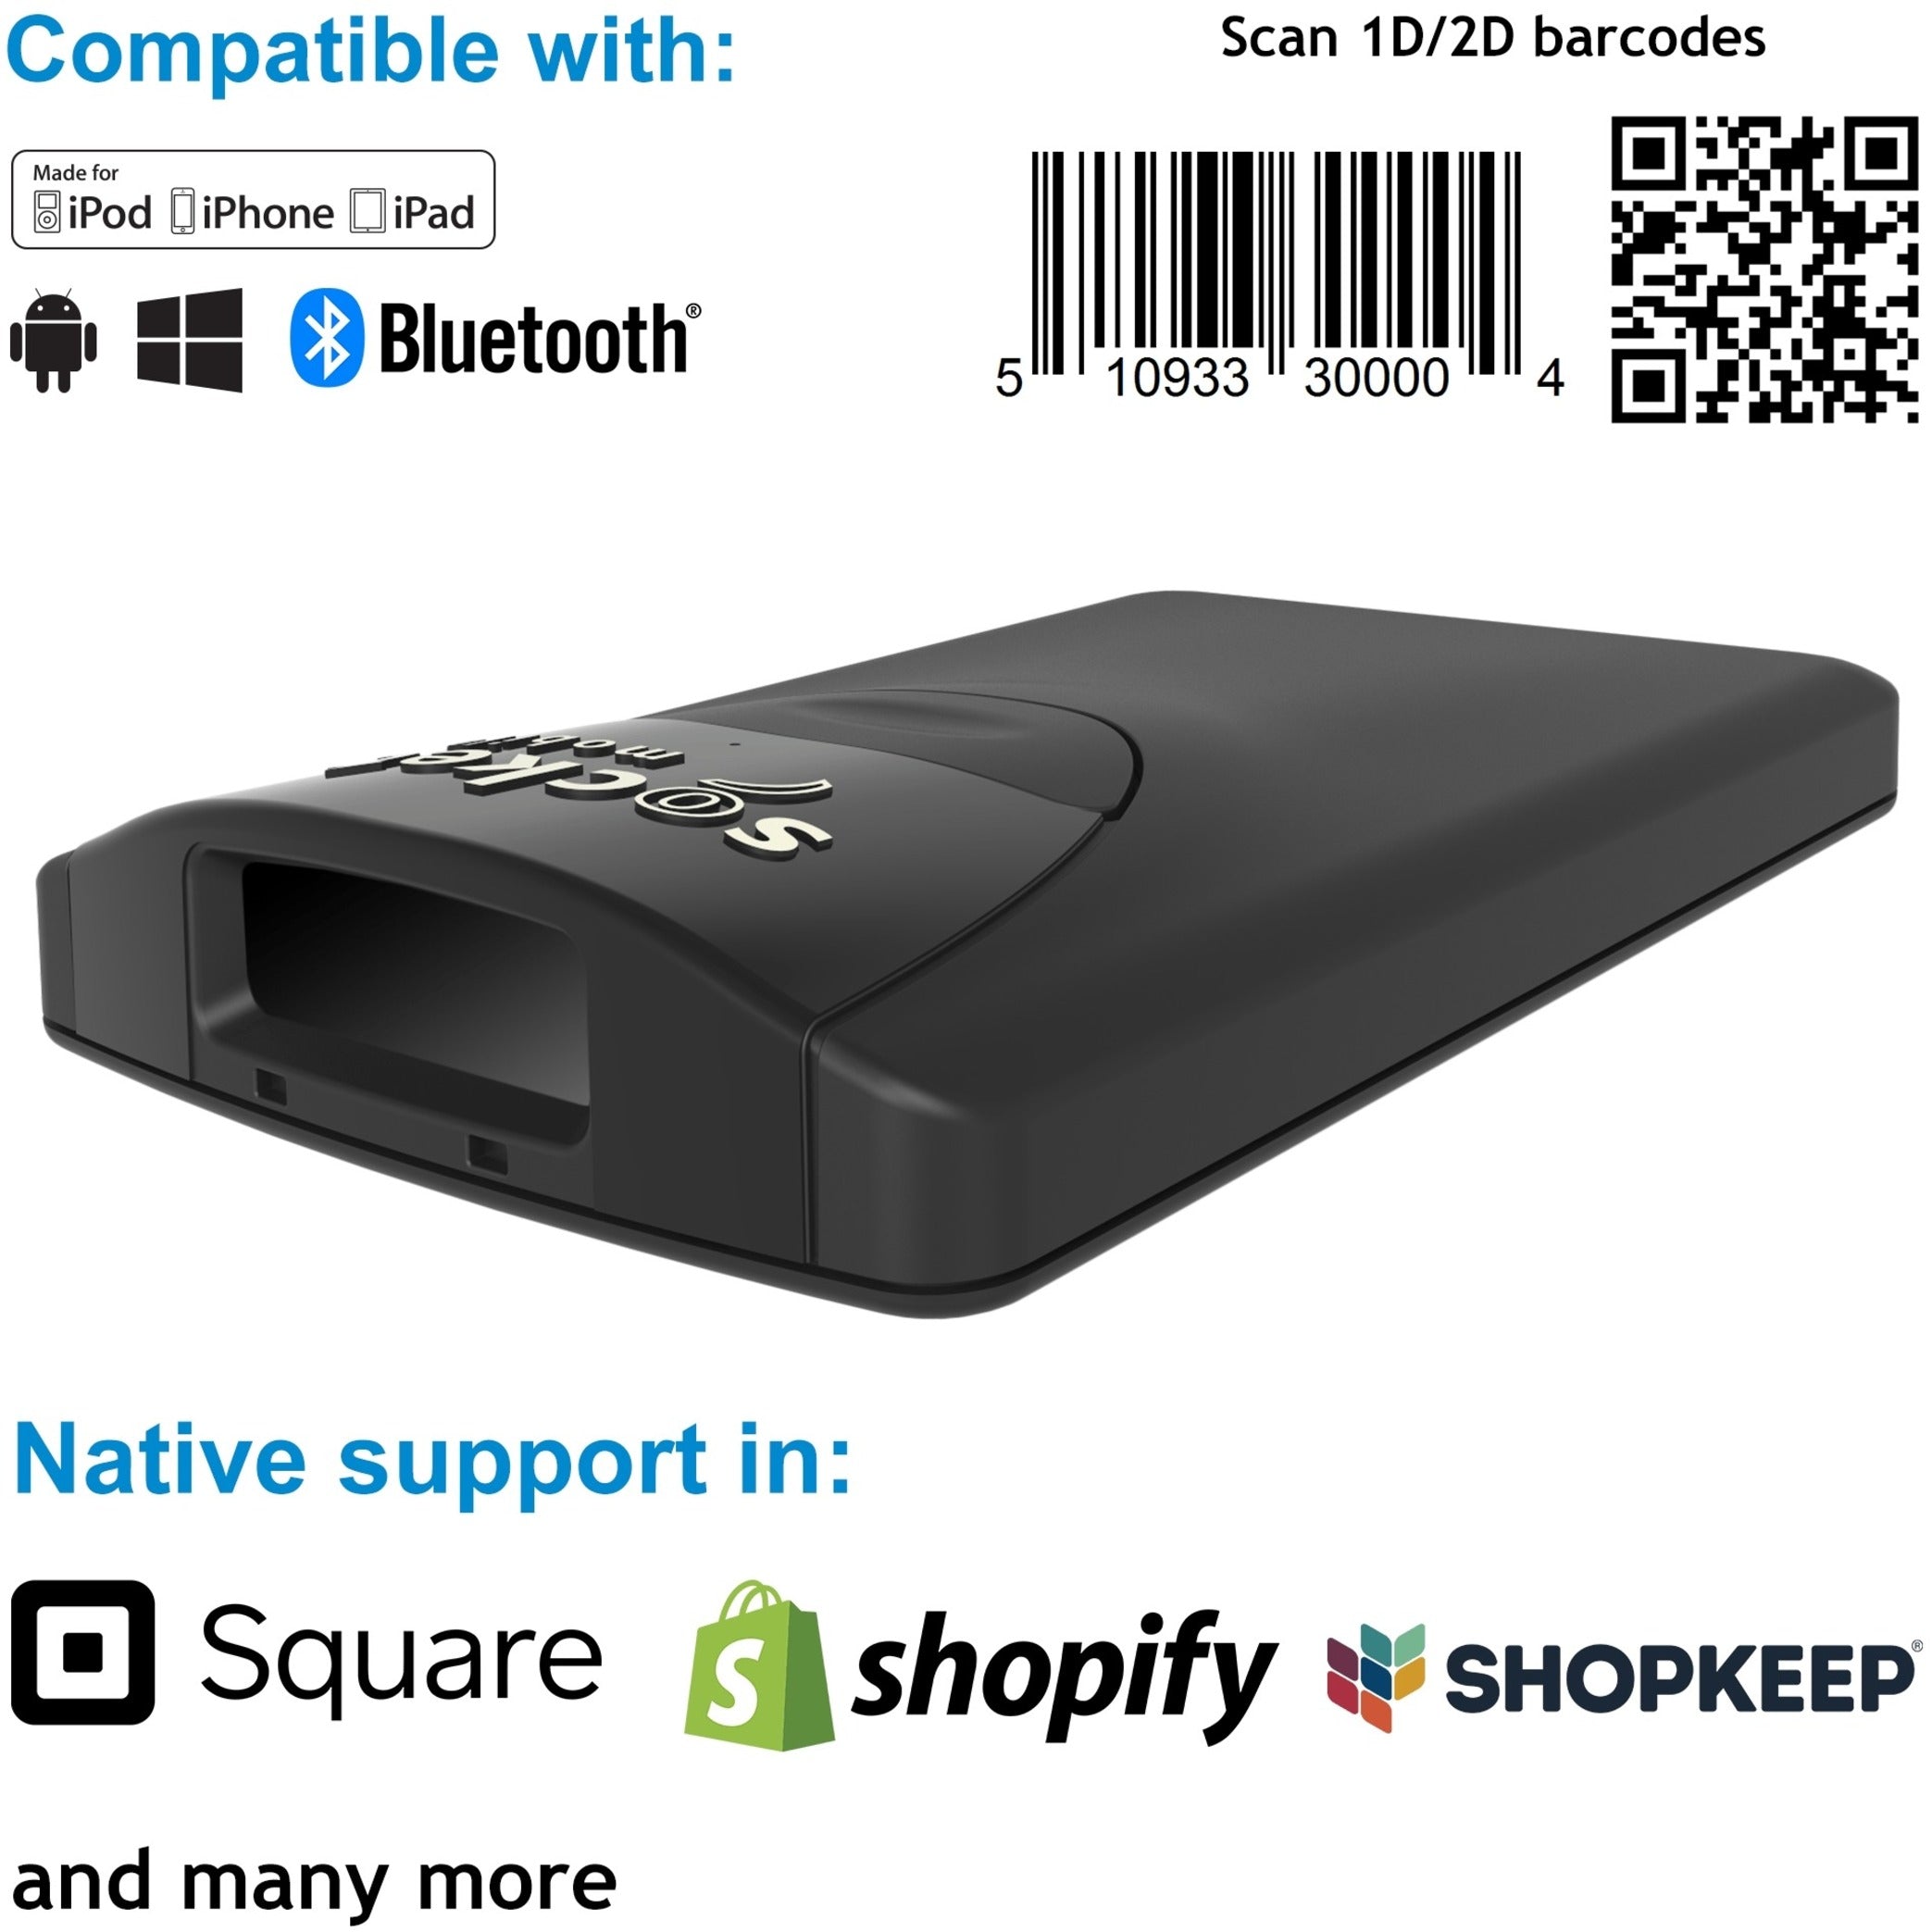 Socket Mobile CX3388-1846 SocketScan S840 Universal Barcode Scanner, Black